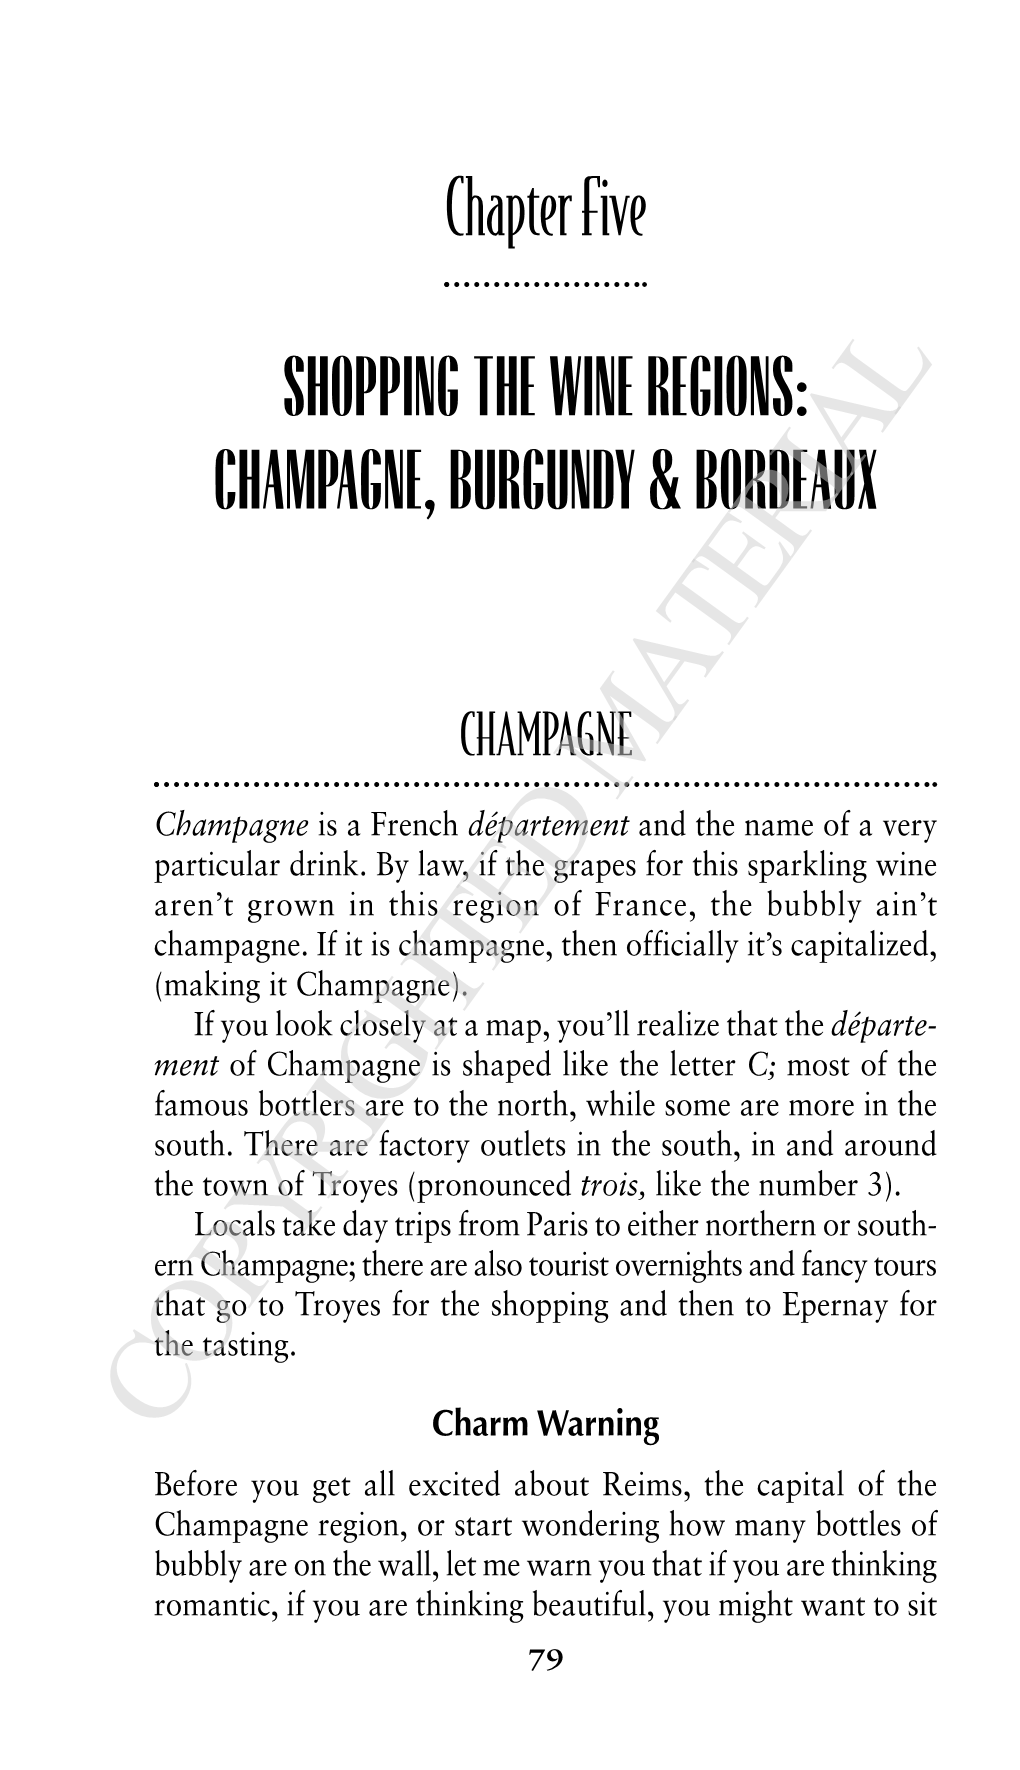 Champagne, Burgundy & Bordeaux